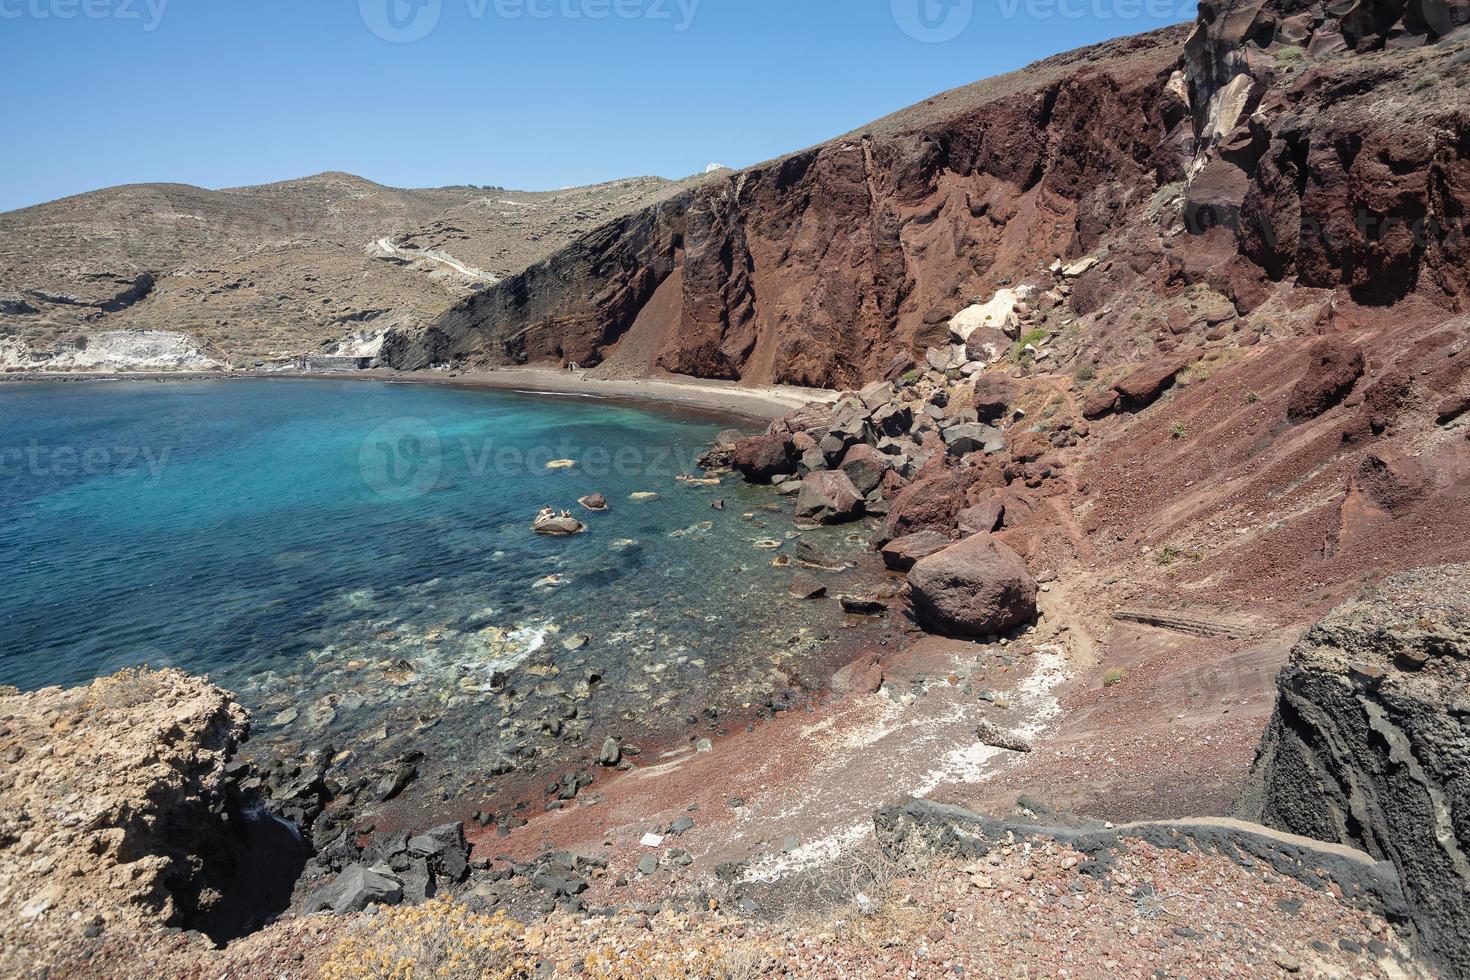 rochas vulcânicas de kokkini paralia ou praia vermelha na ilha de santorini, grécia. foto